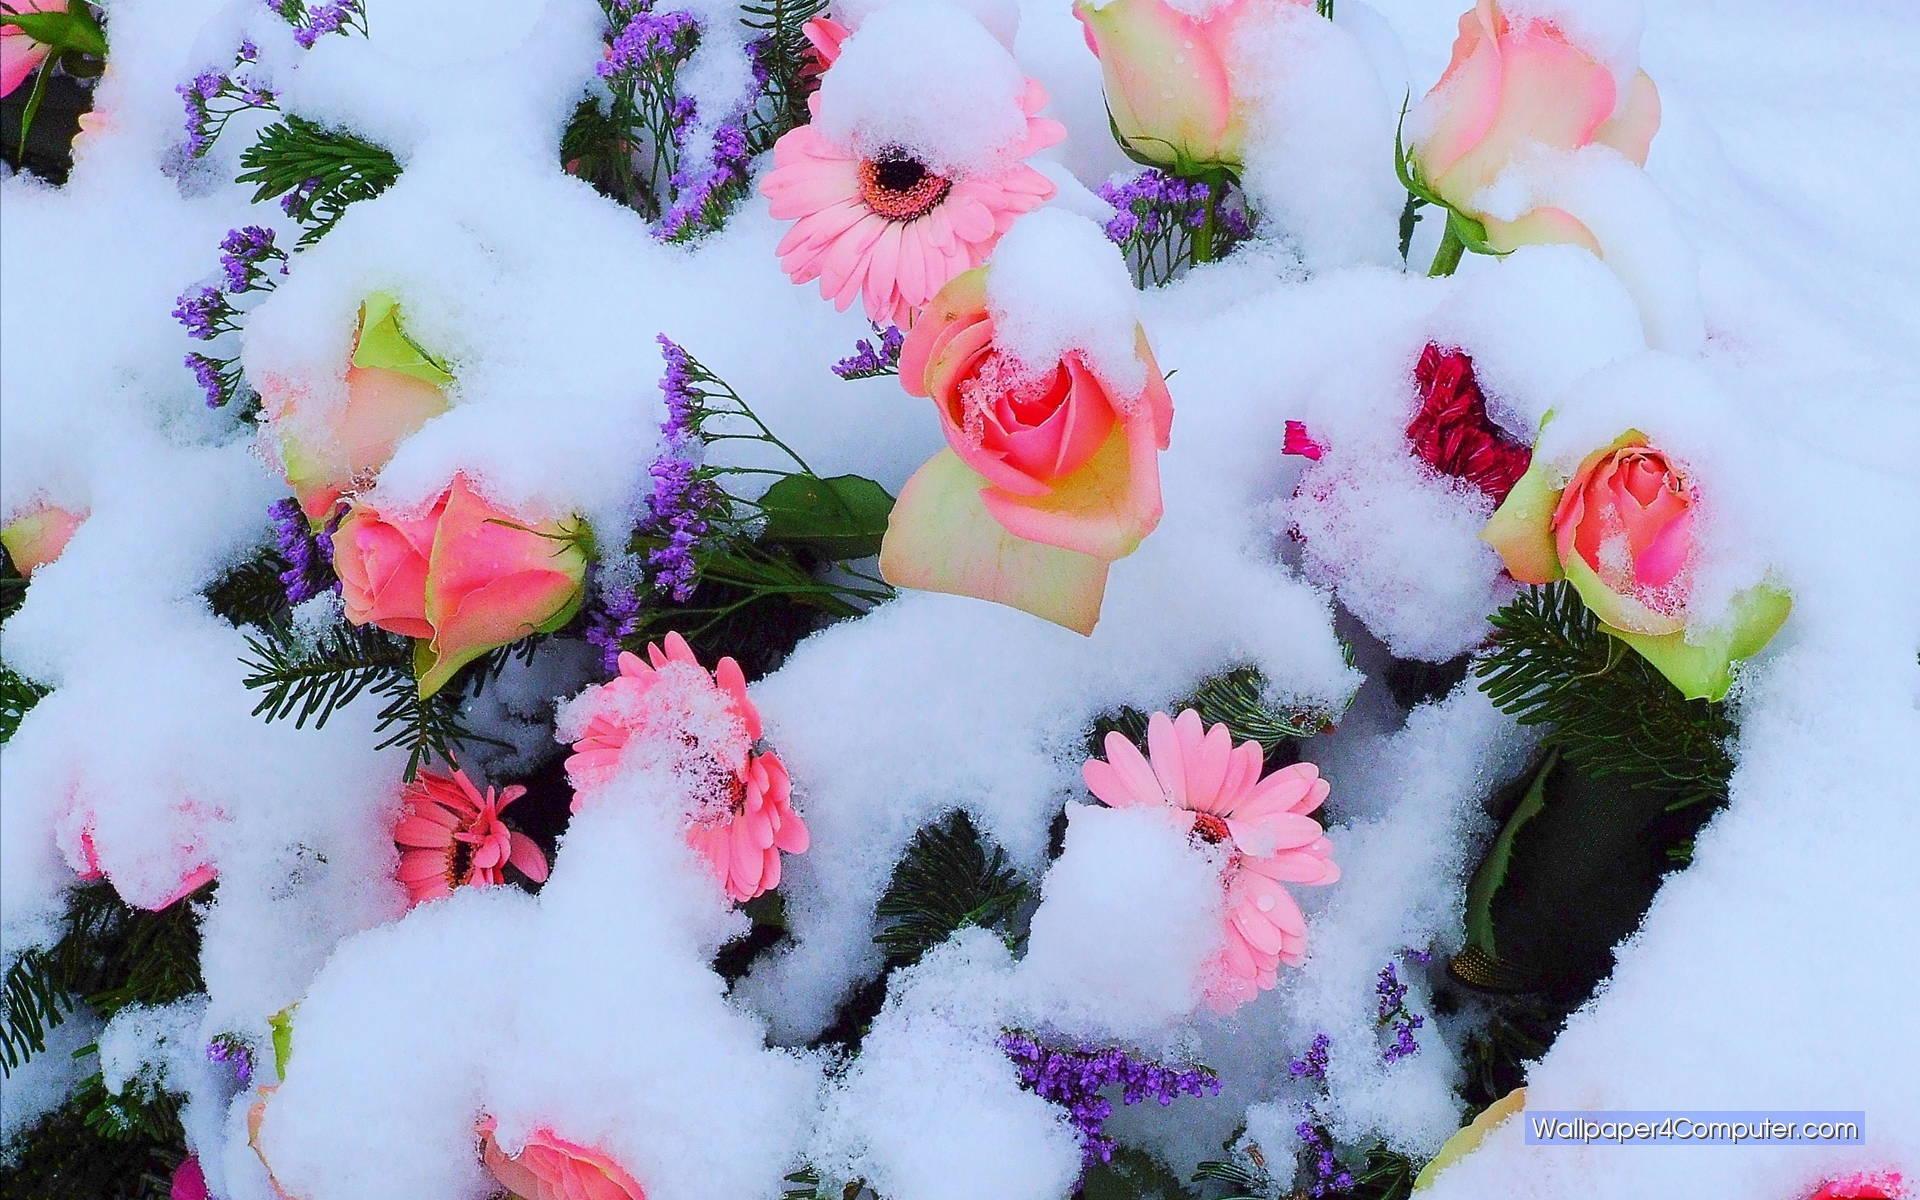 Flowers in Snow Wallpaper Free Flowers in Snow